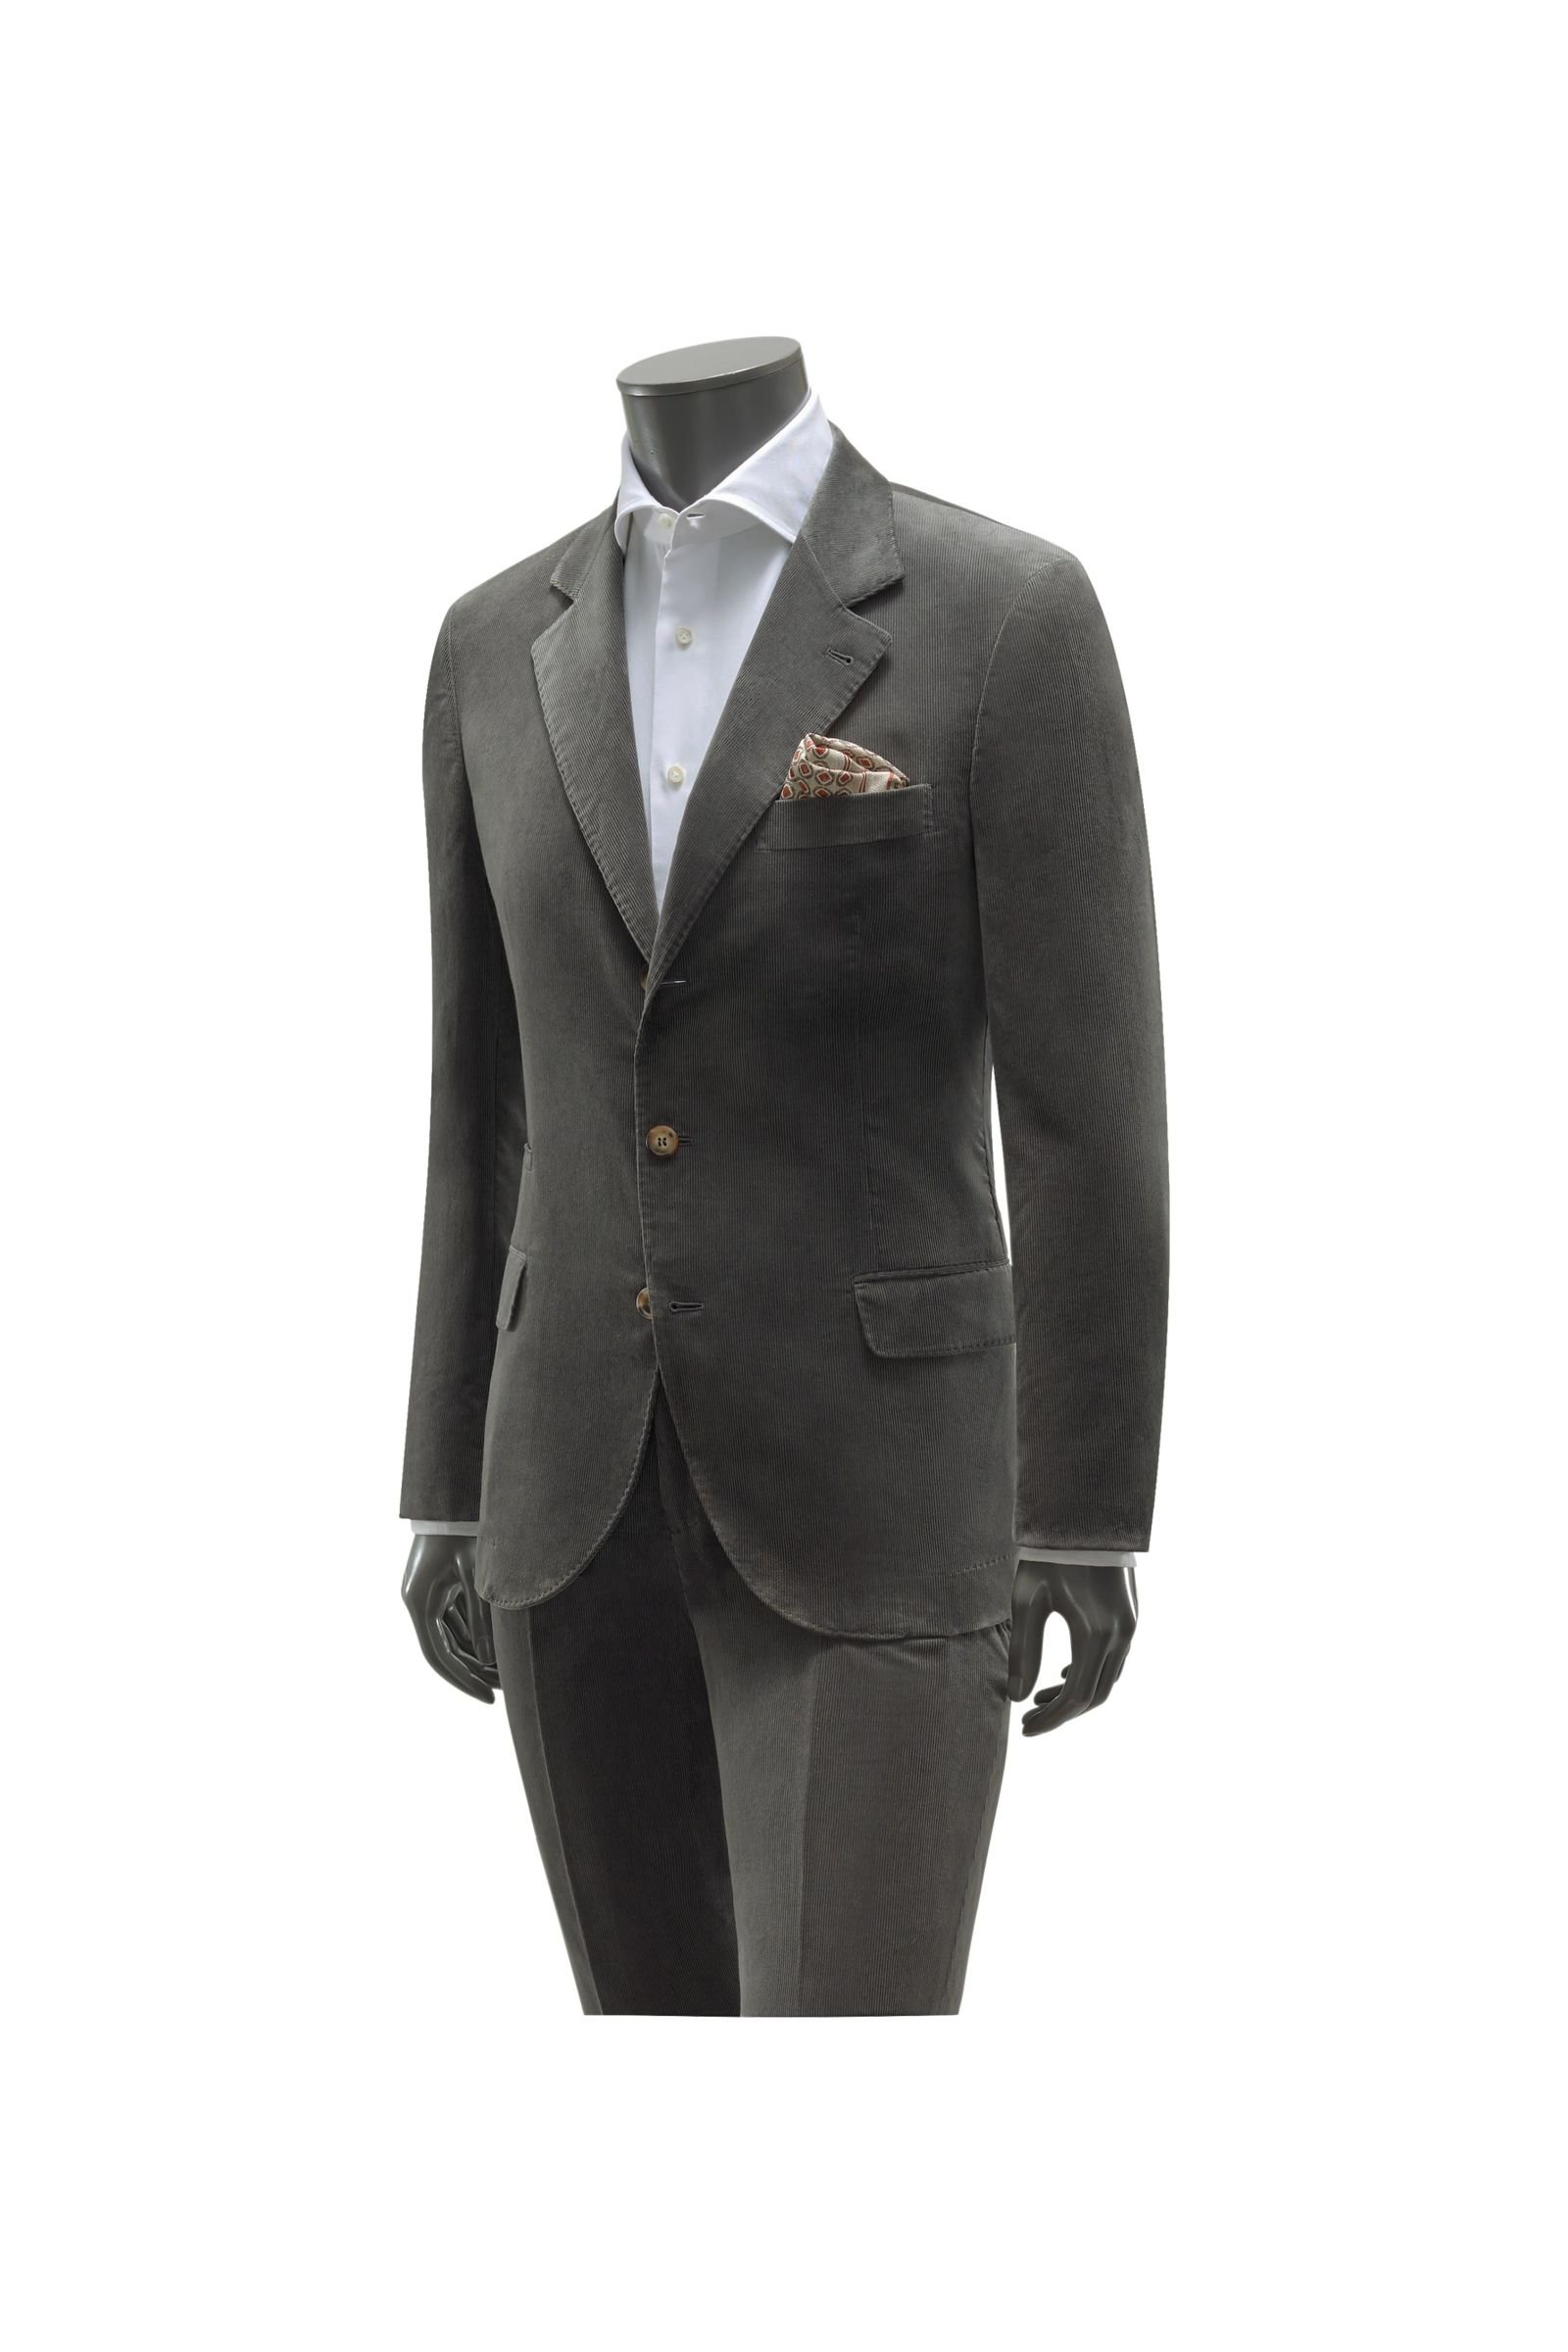 Corduroy suit grey-brown